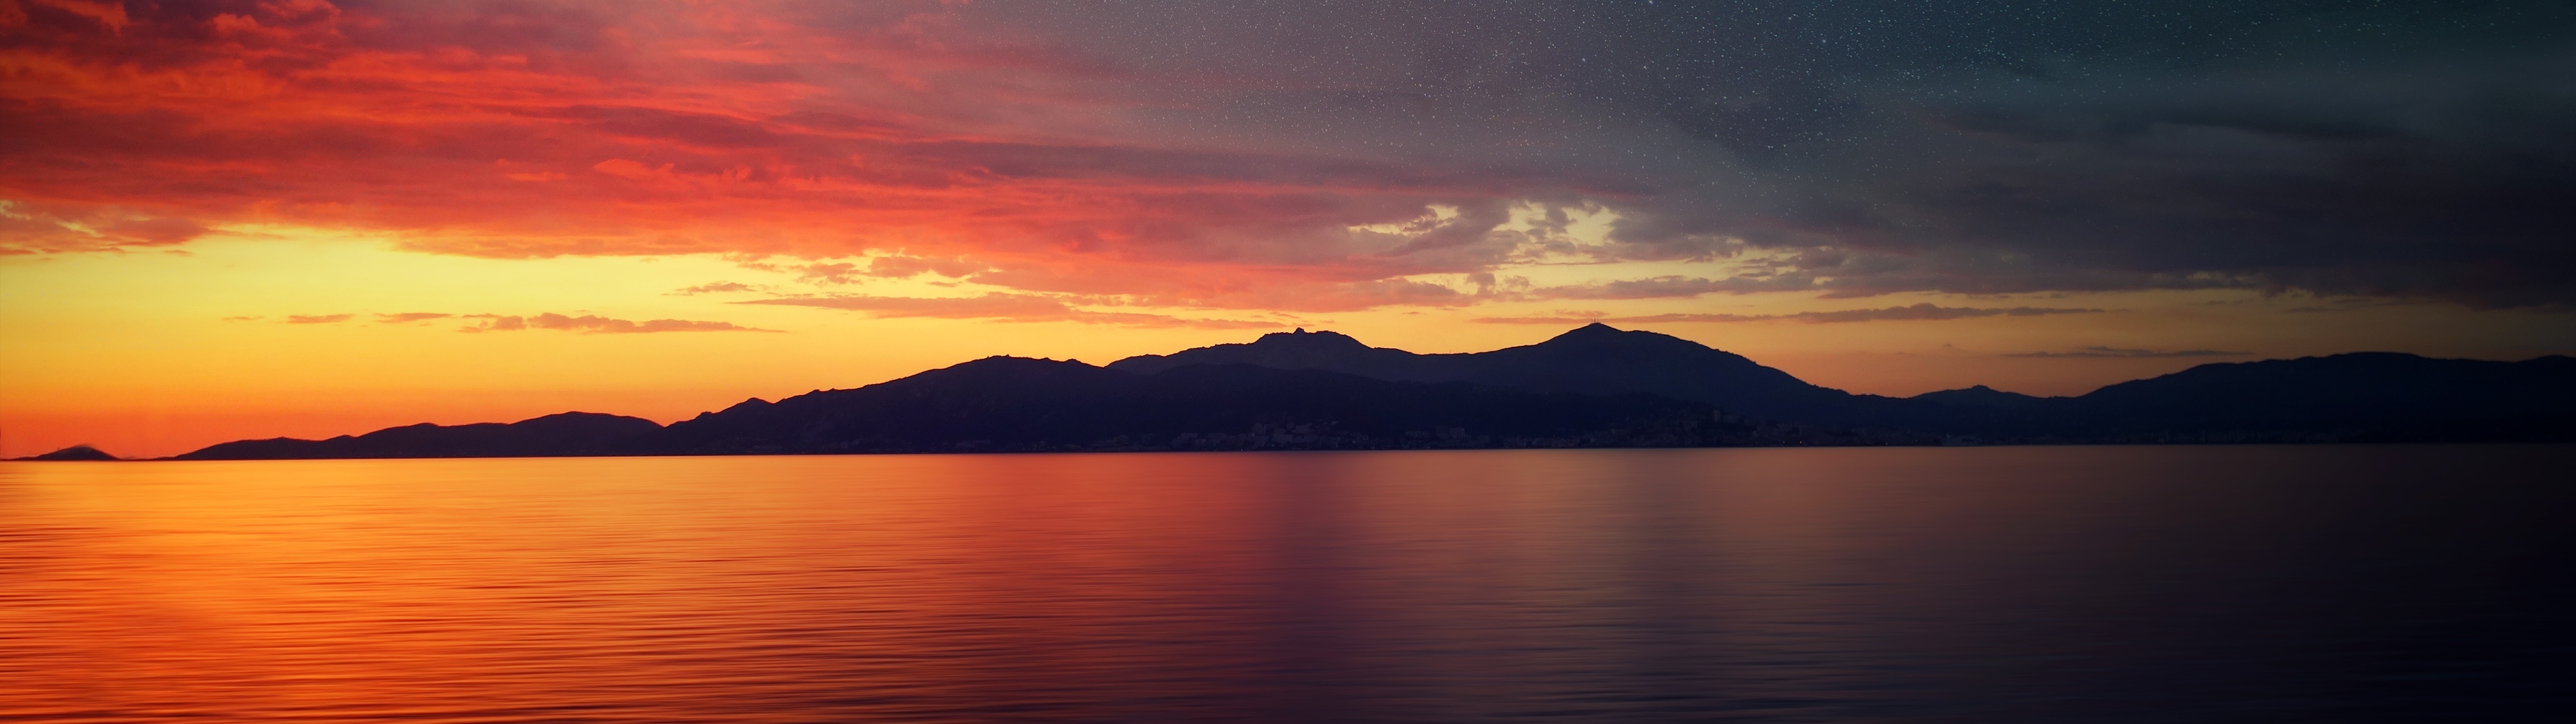 Corsica Island, Sunset silhouette, Landscape astronomy, Nature, 3840x1080 Dual Screen Desktop